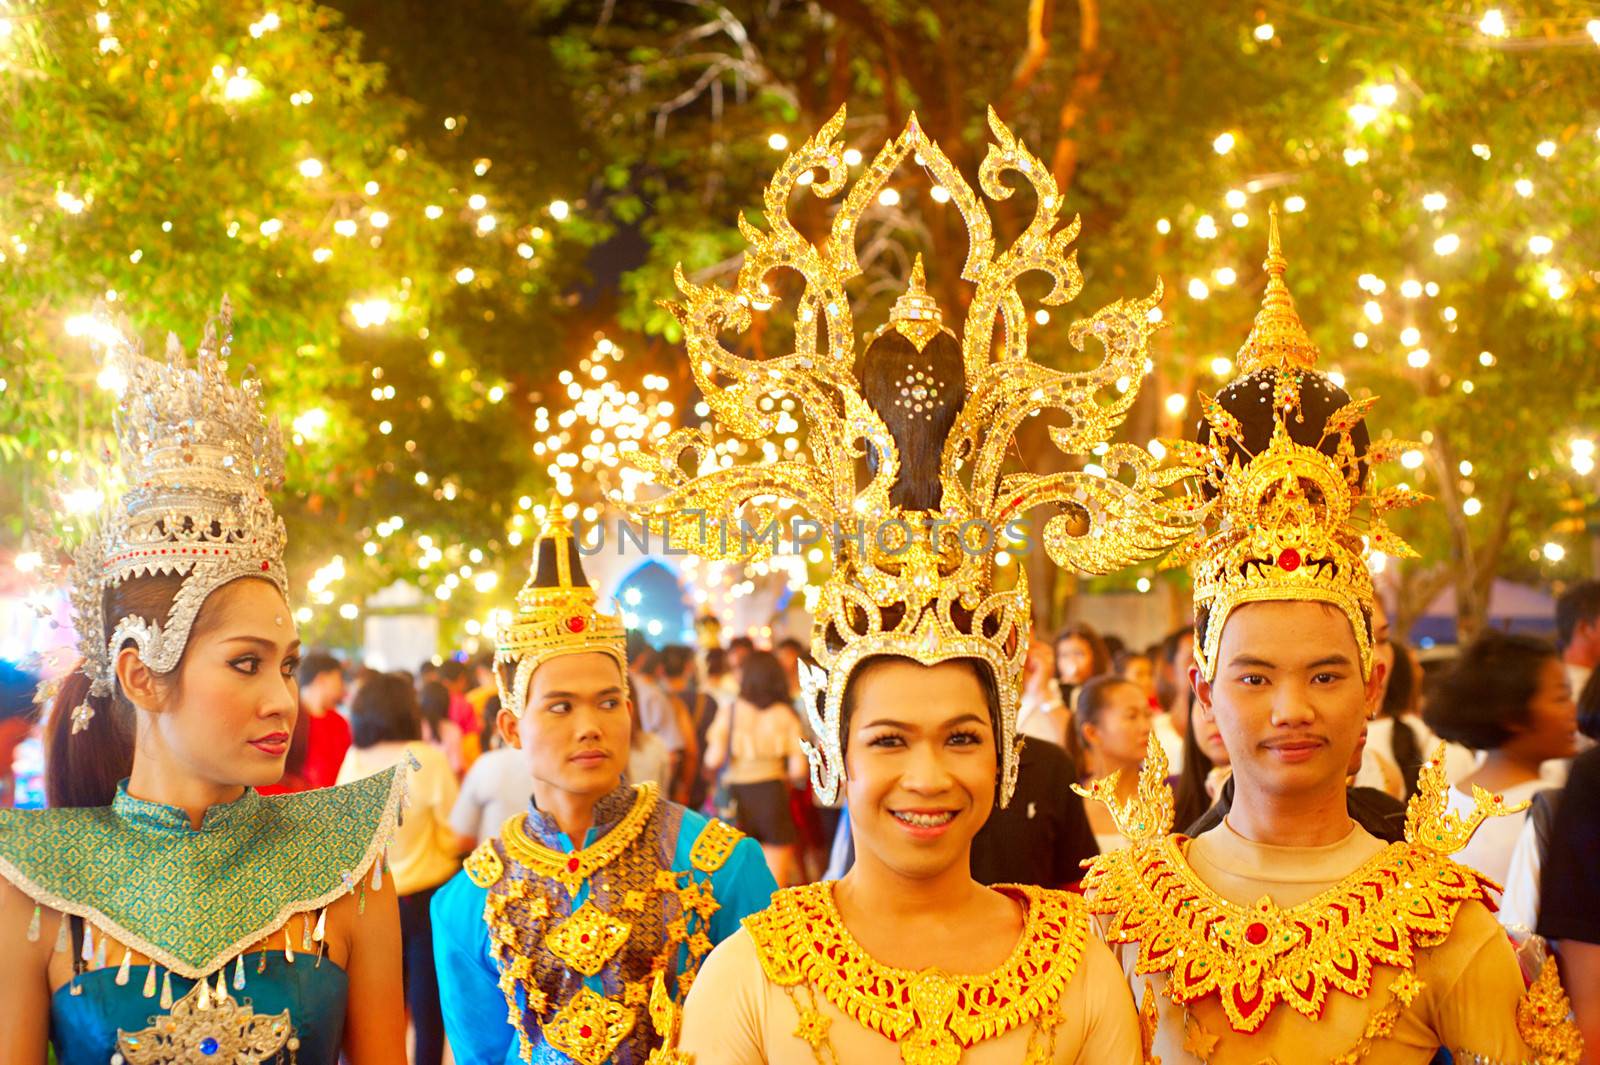 LOPBURI, THAILAND - FEB 23, 2013 : Portrait of transvestites performing during the land of King Narai festival in Lopburi, Thailand